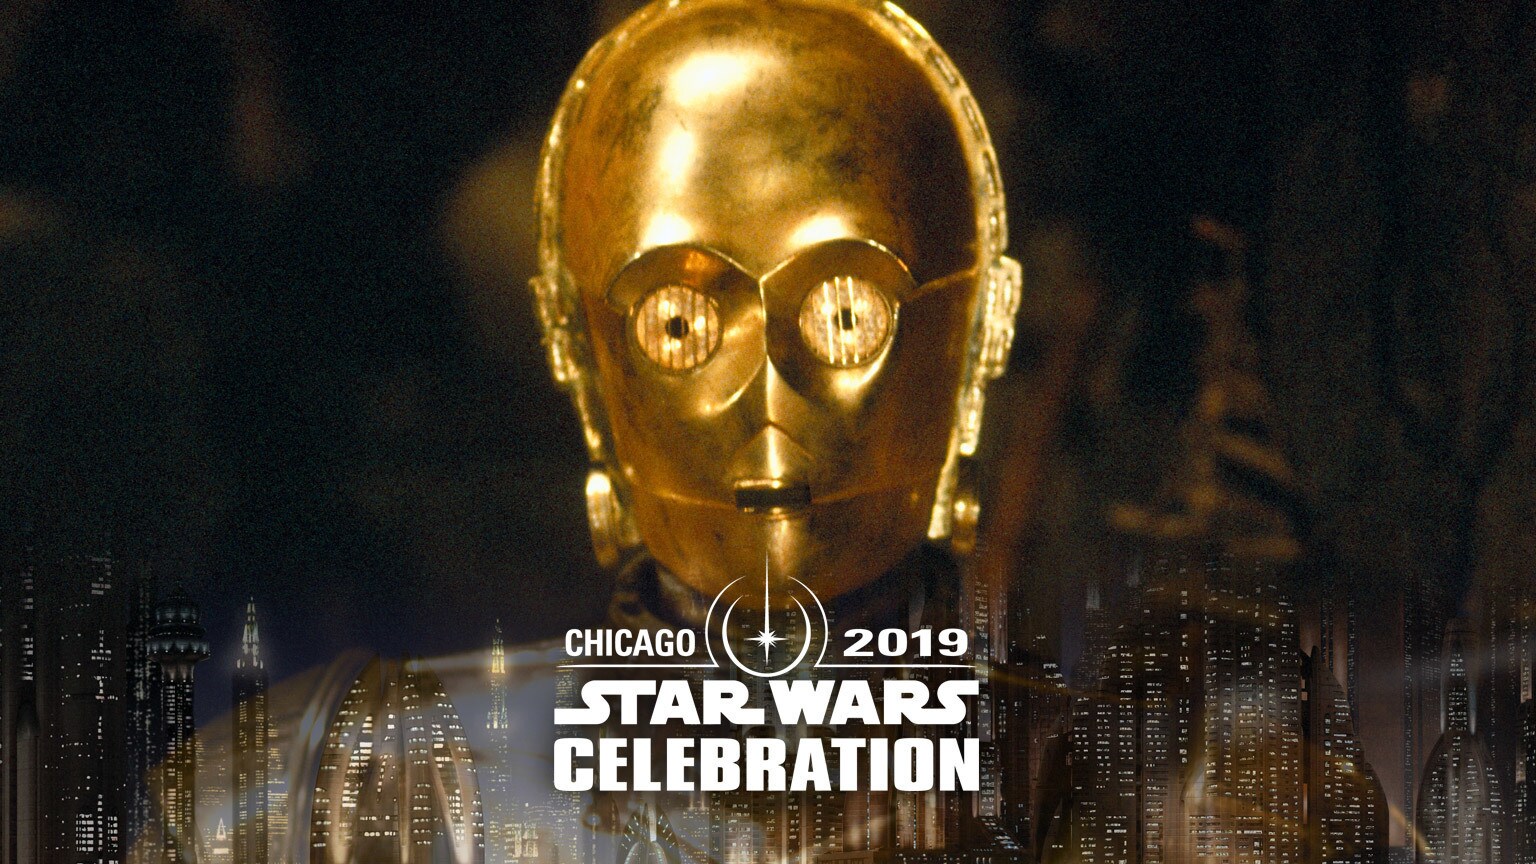 Star Wars Legend Anthony Daniels is Headed to Star Wars Celebration